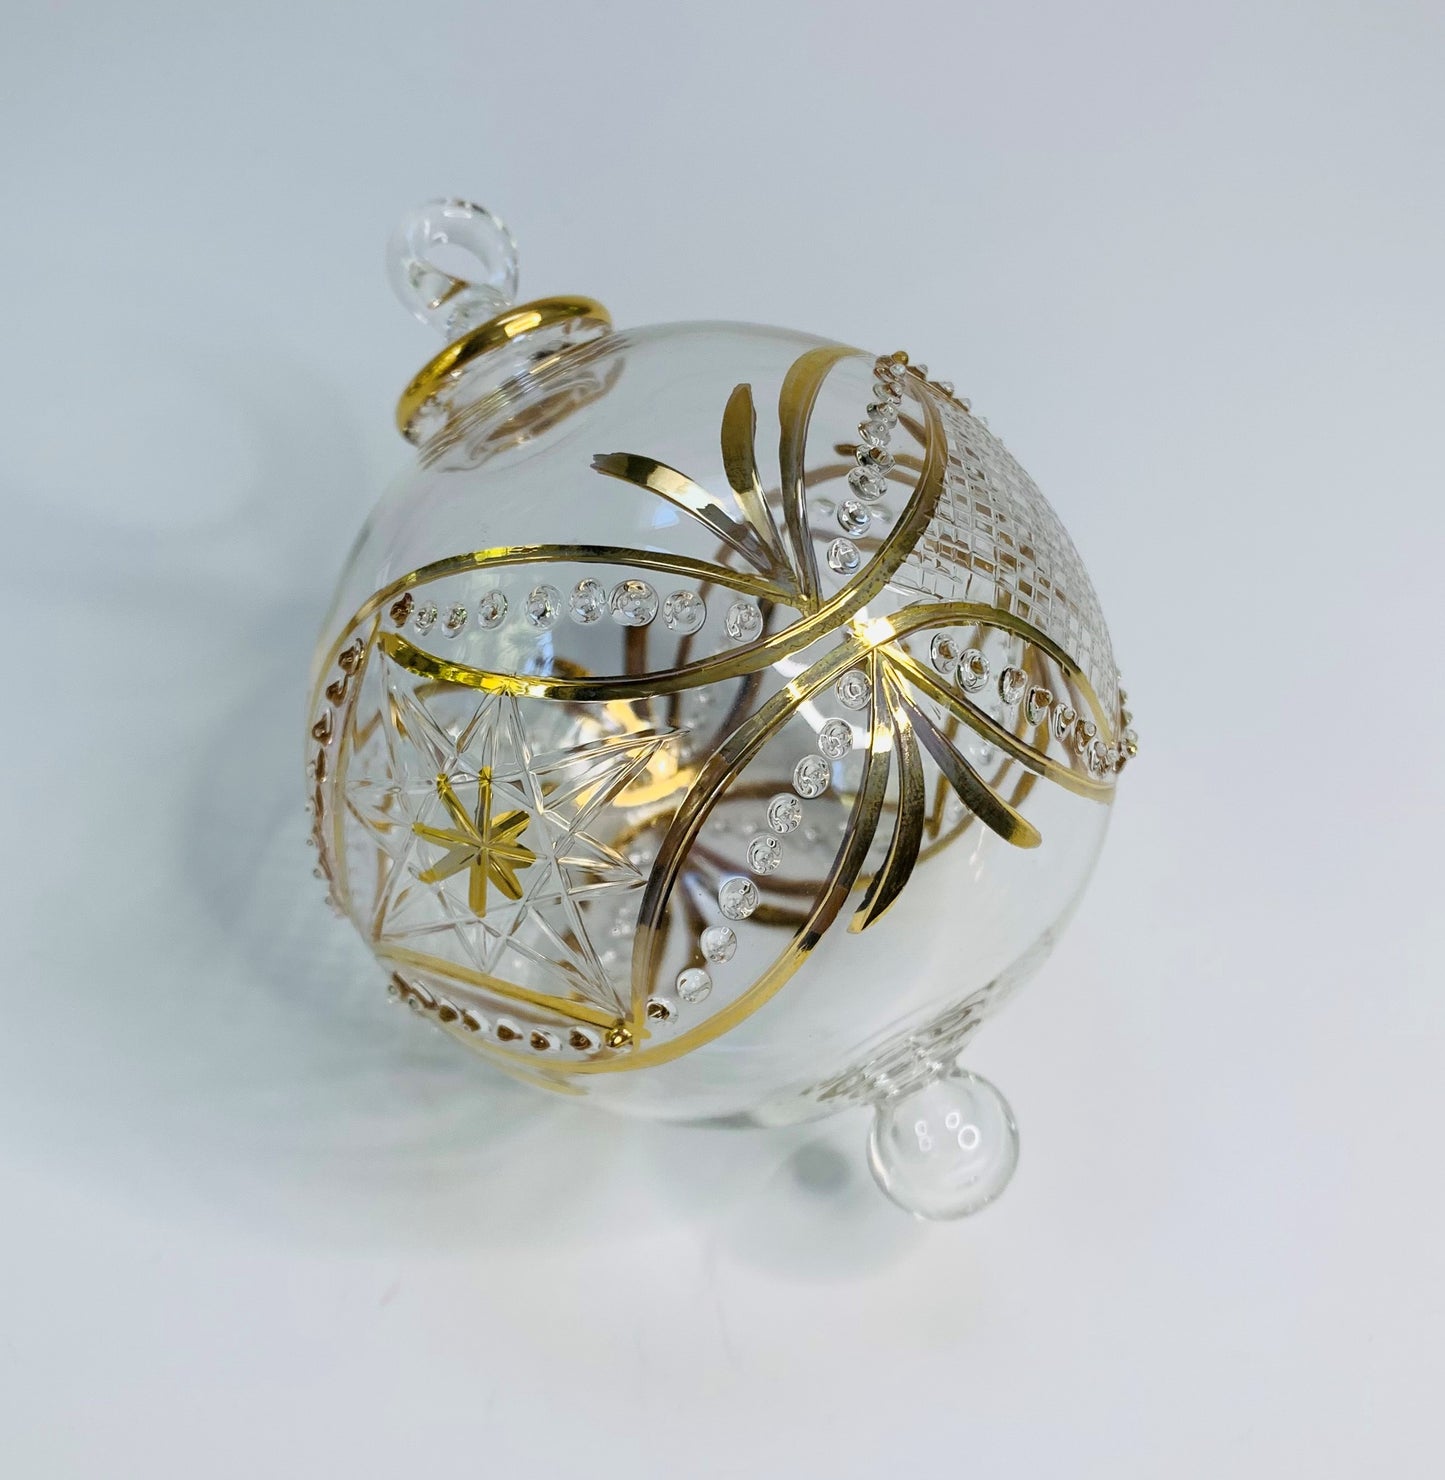 Blown Glass Ornament - Gold Carousel